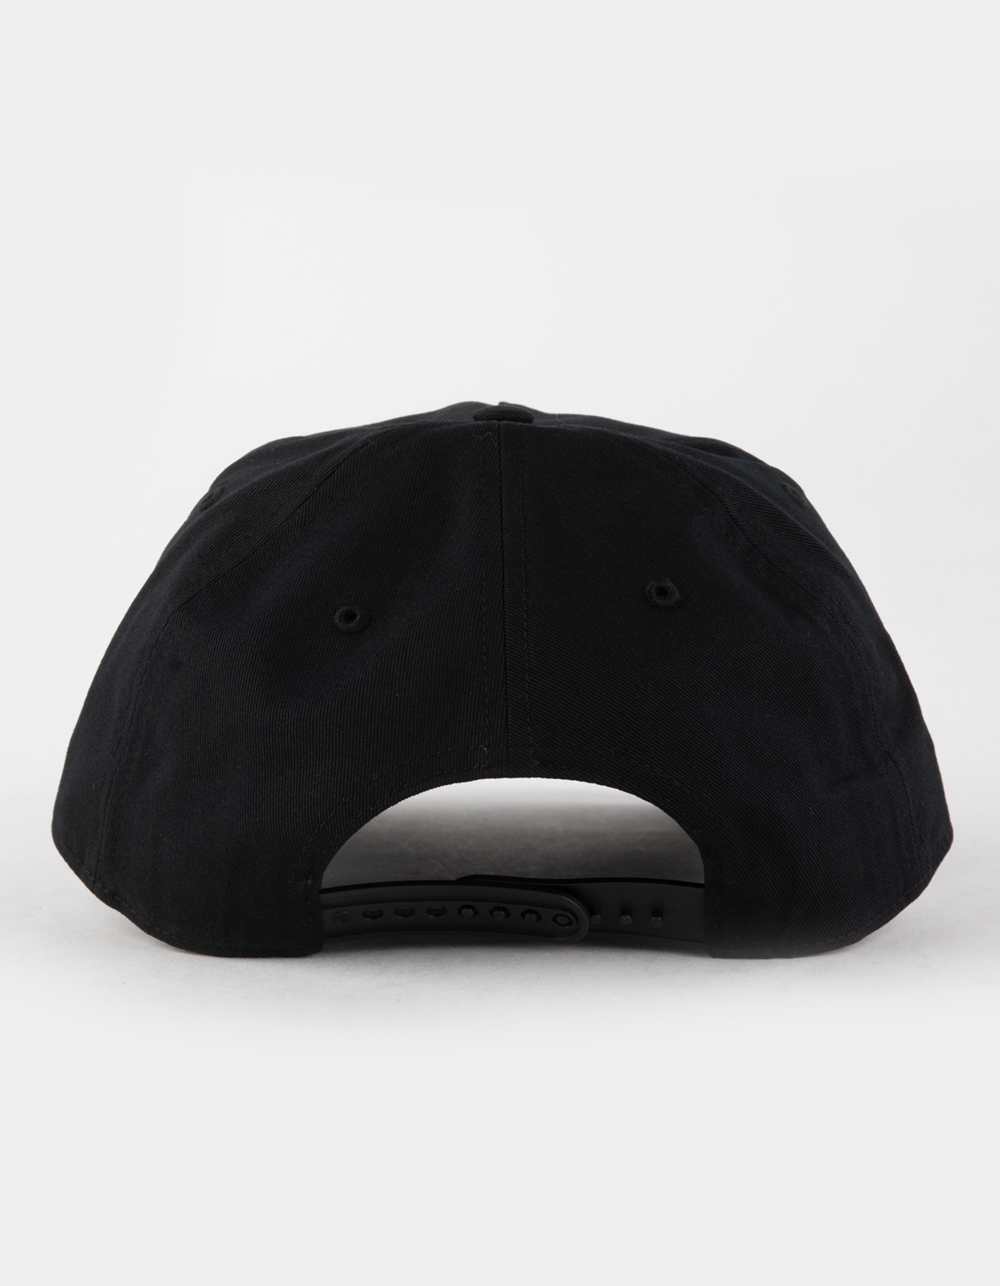 LA Los Angeles Kings 47 brand snapback hat all black original